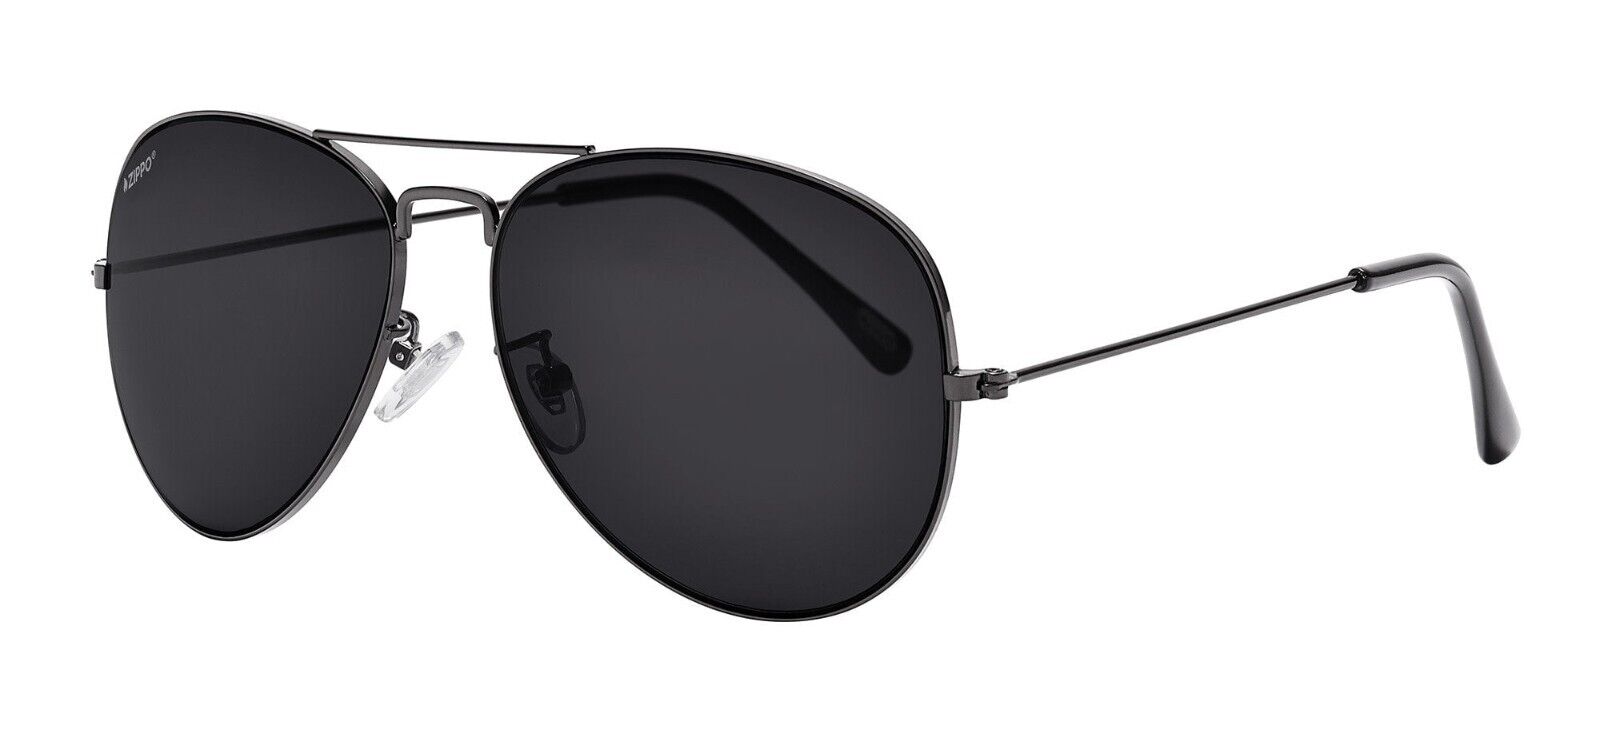 Zippo Polarized Pilot Sunglasses, OB36-10U